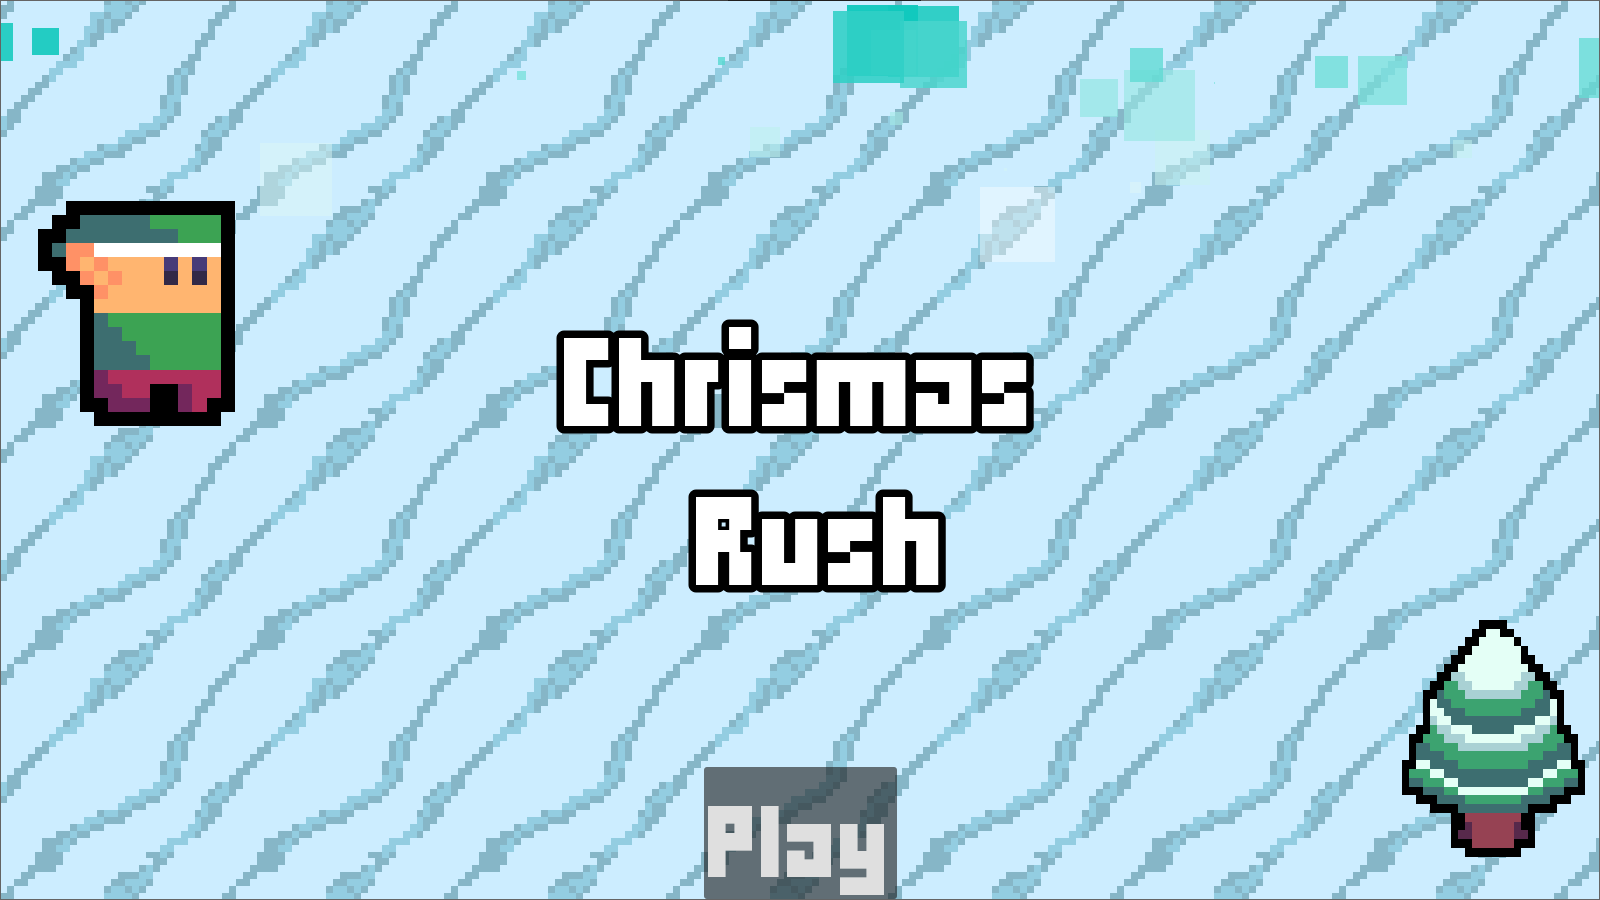 Chrismas rush